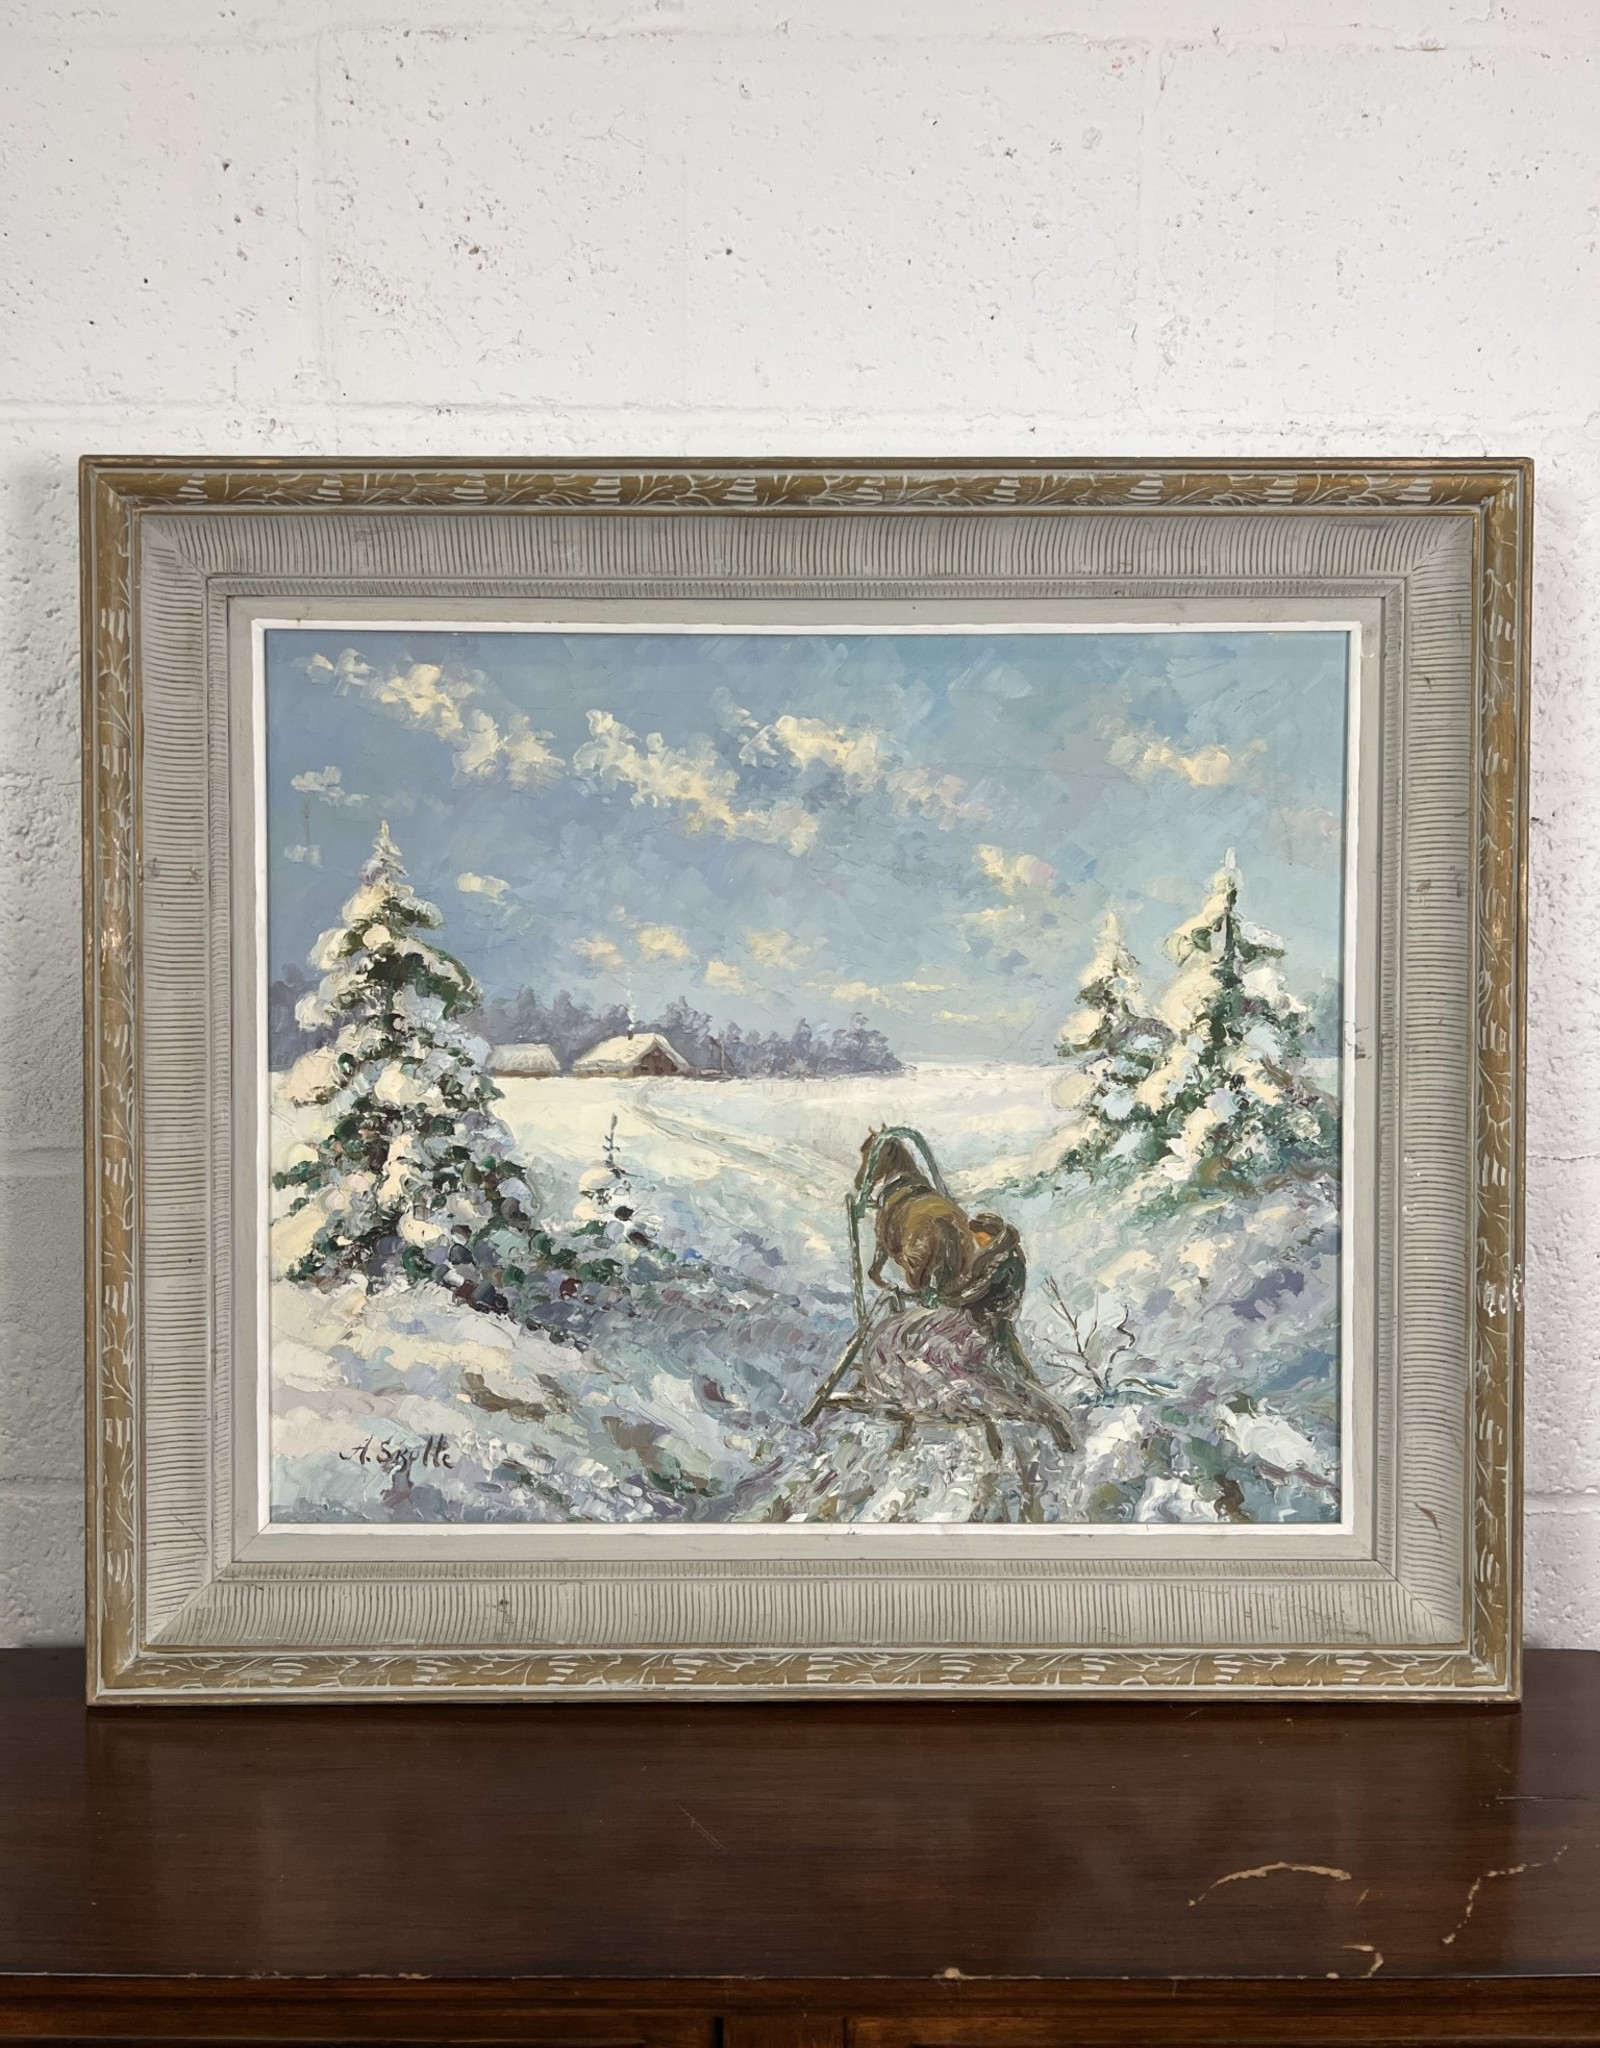 Winter Solstice, framed oil on canvas